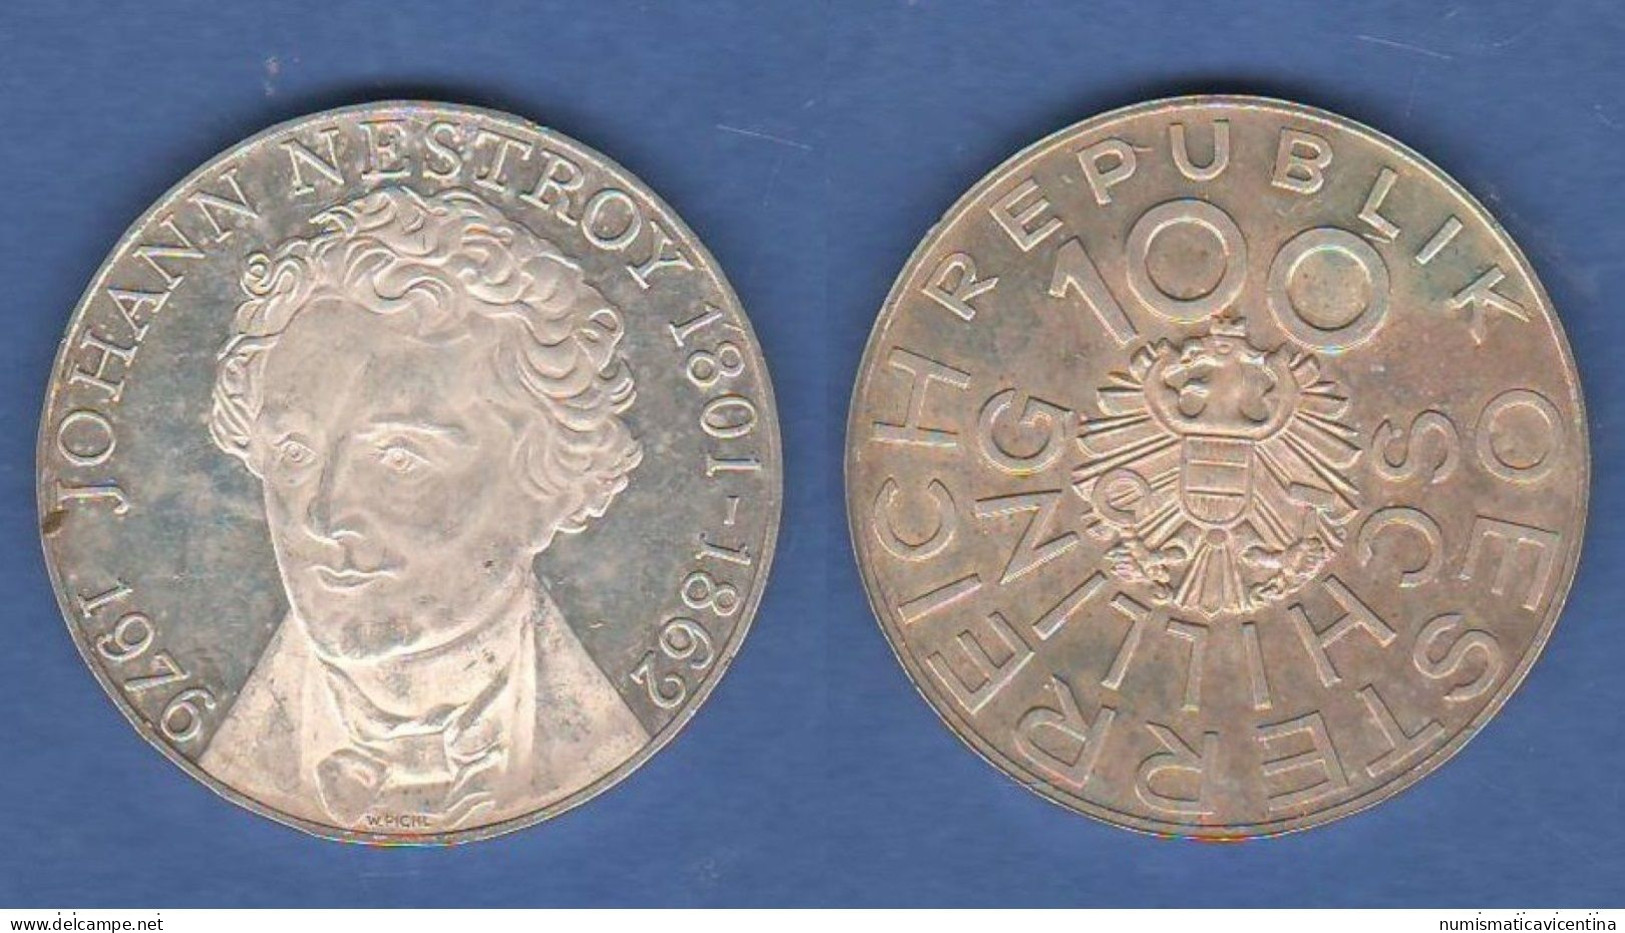 Austria Österreich Shilling 100 Schilling 1976 Johann NESTROY Silber Proof Coin - Austria